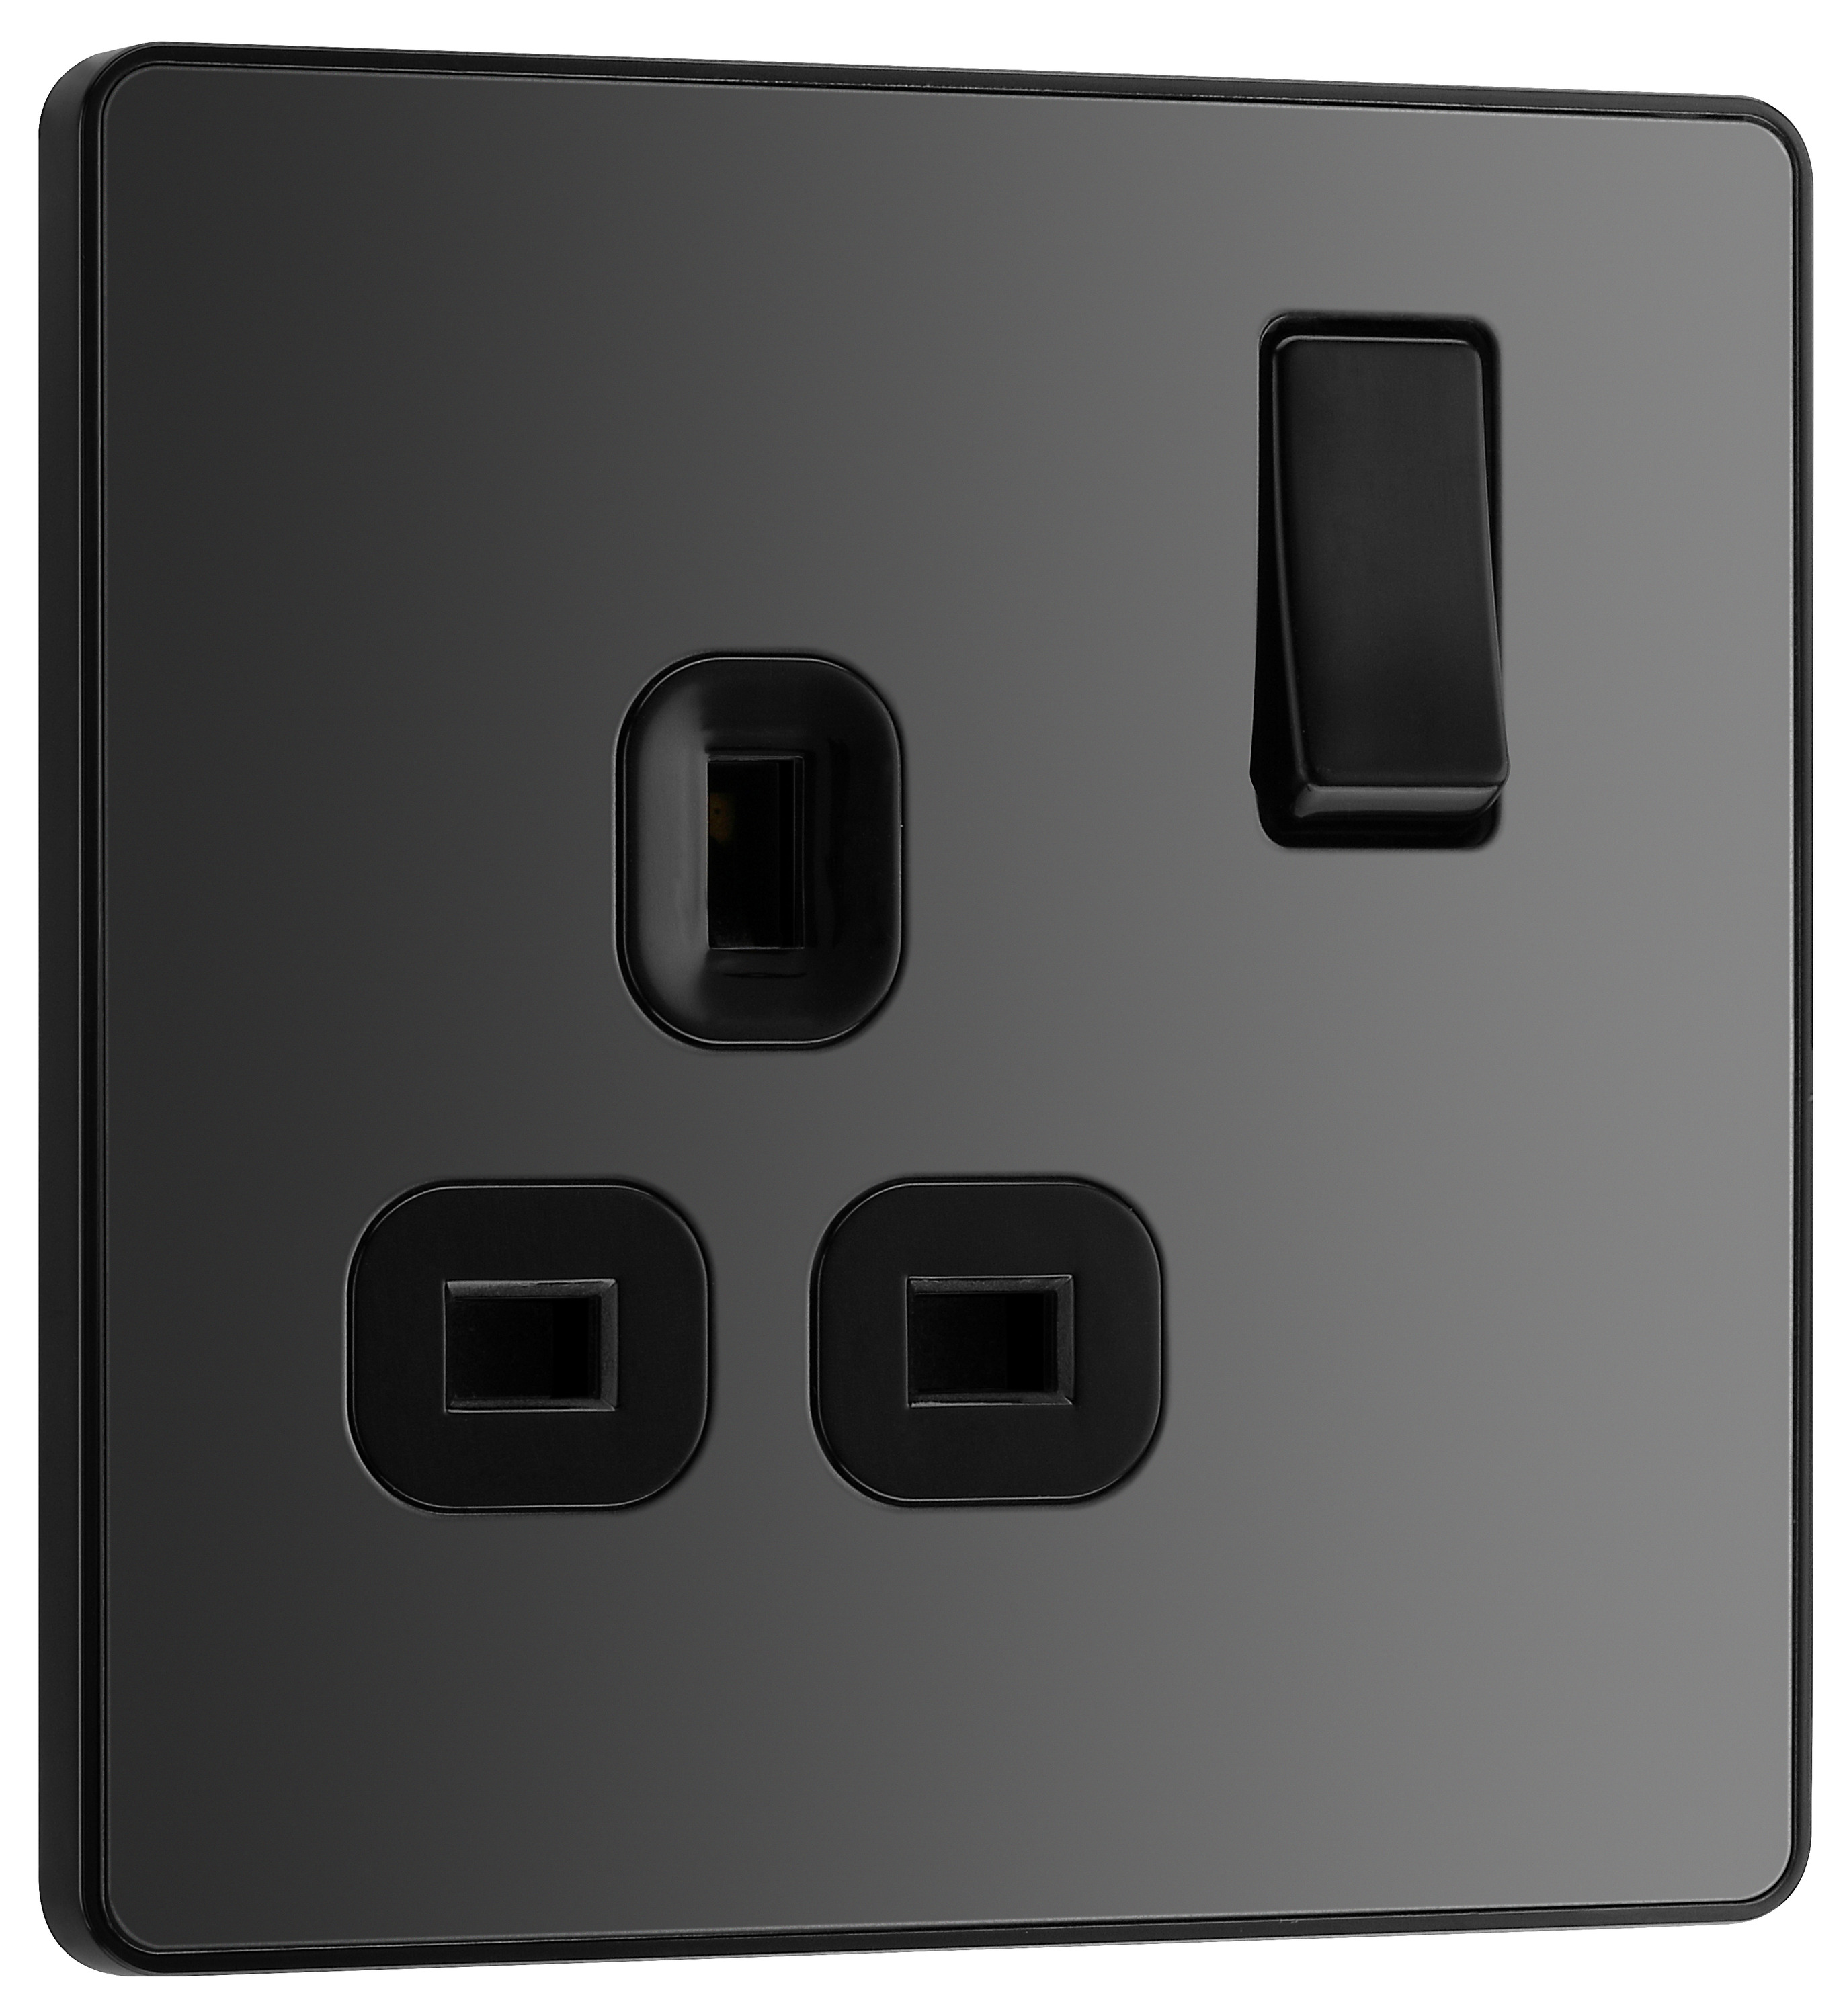 BG Evolve Black Chrome 13A Single Switched Power Socket